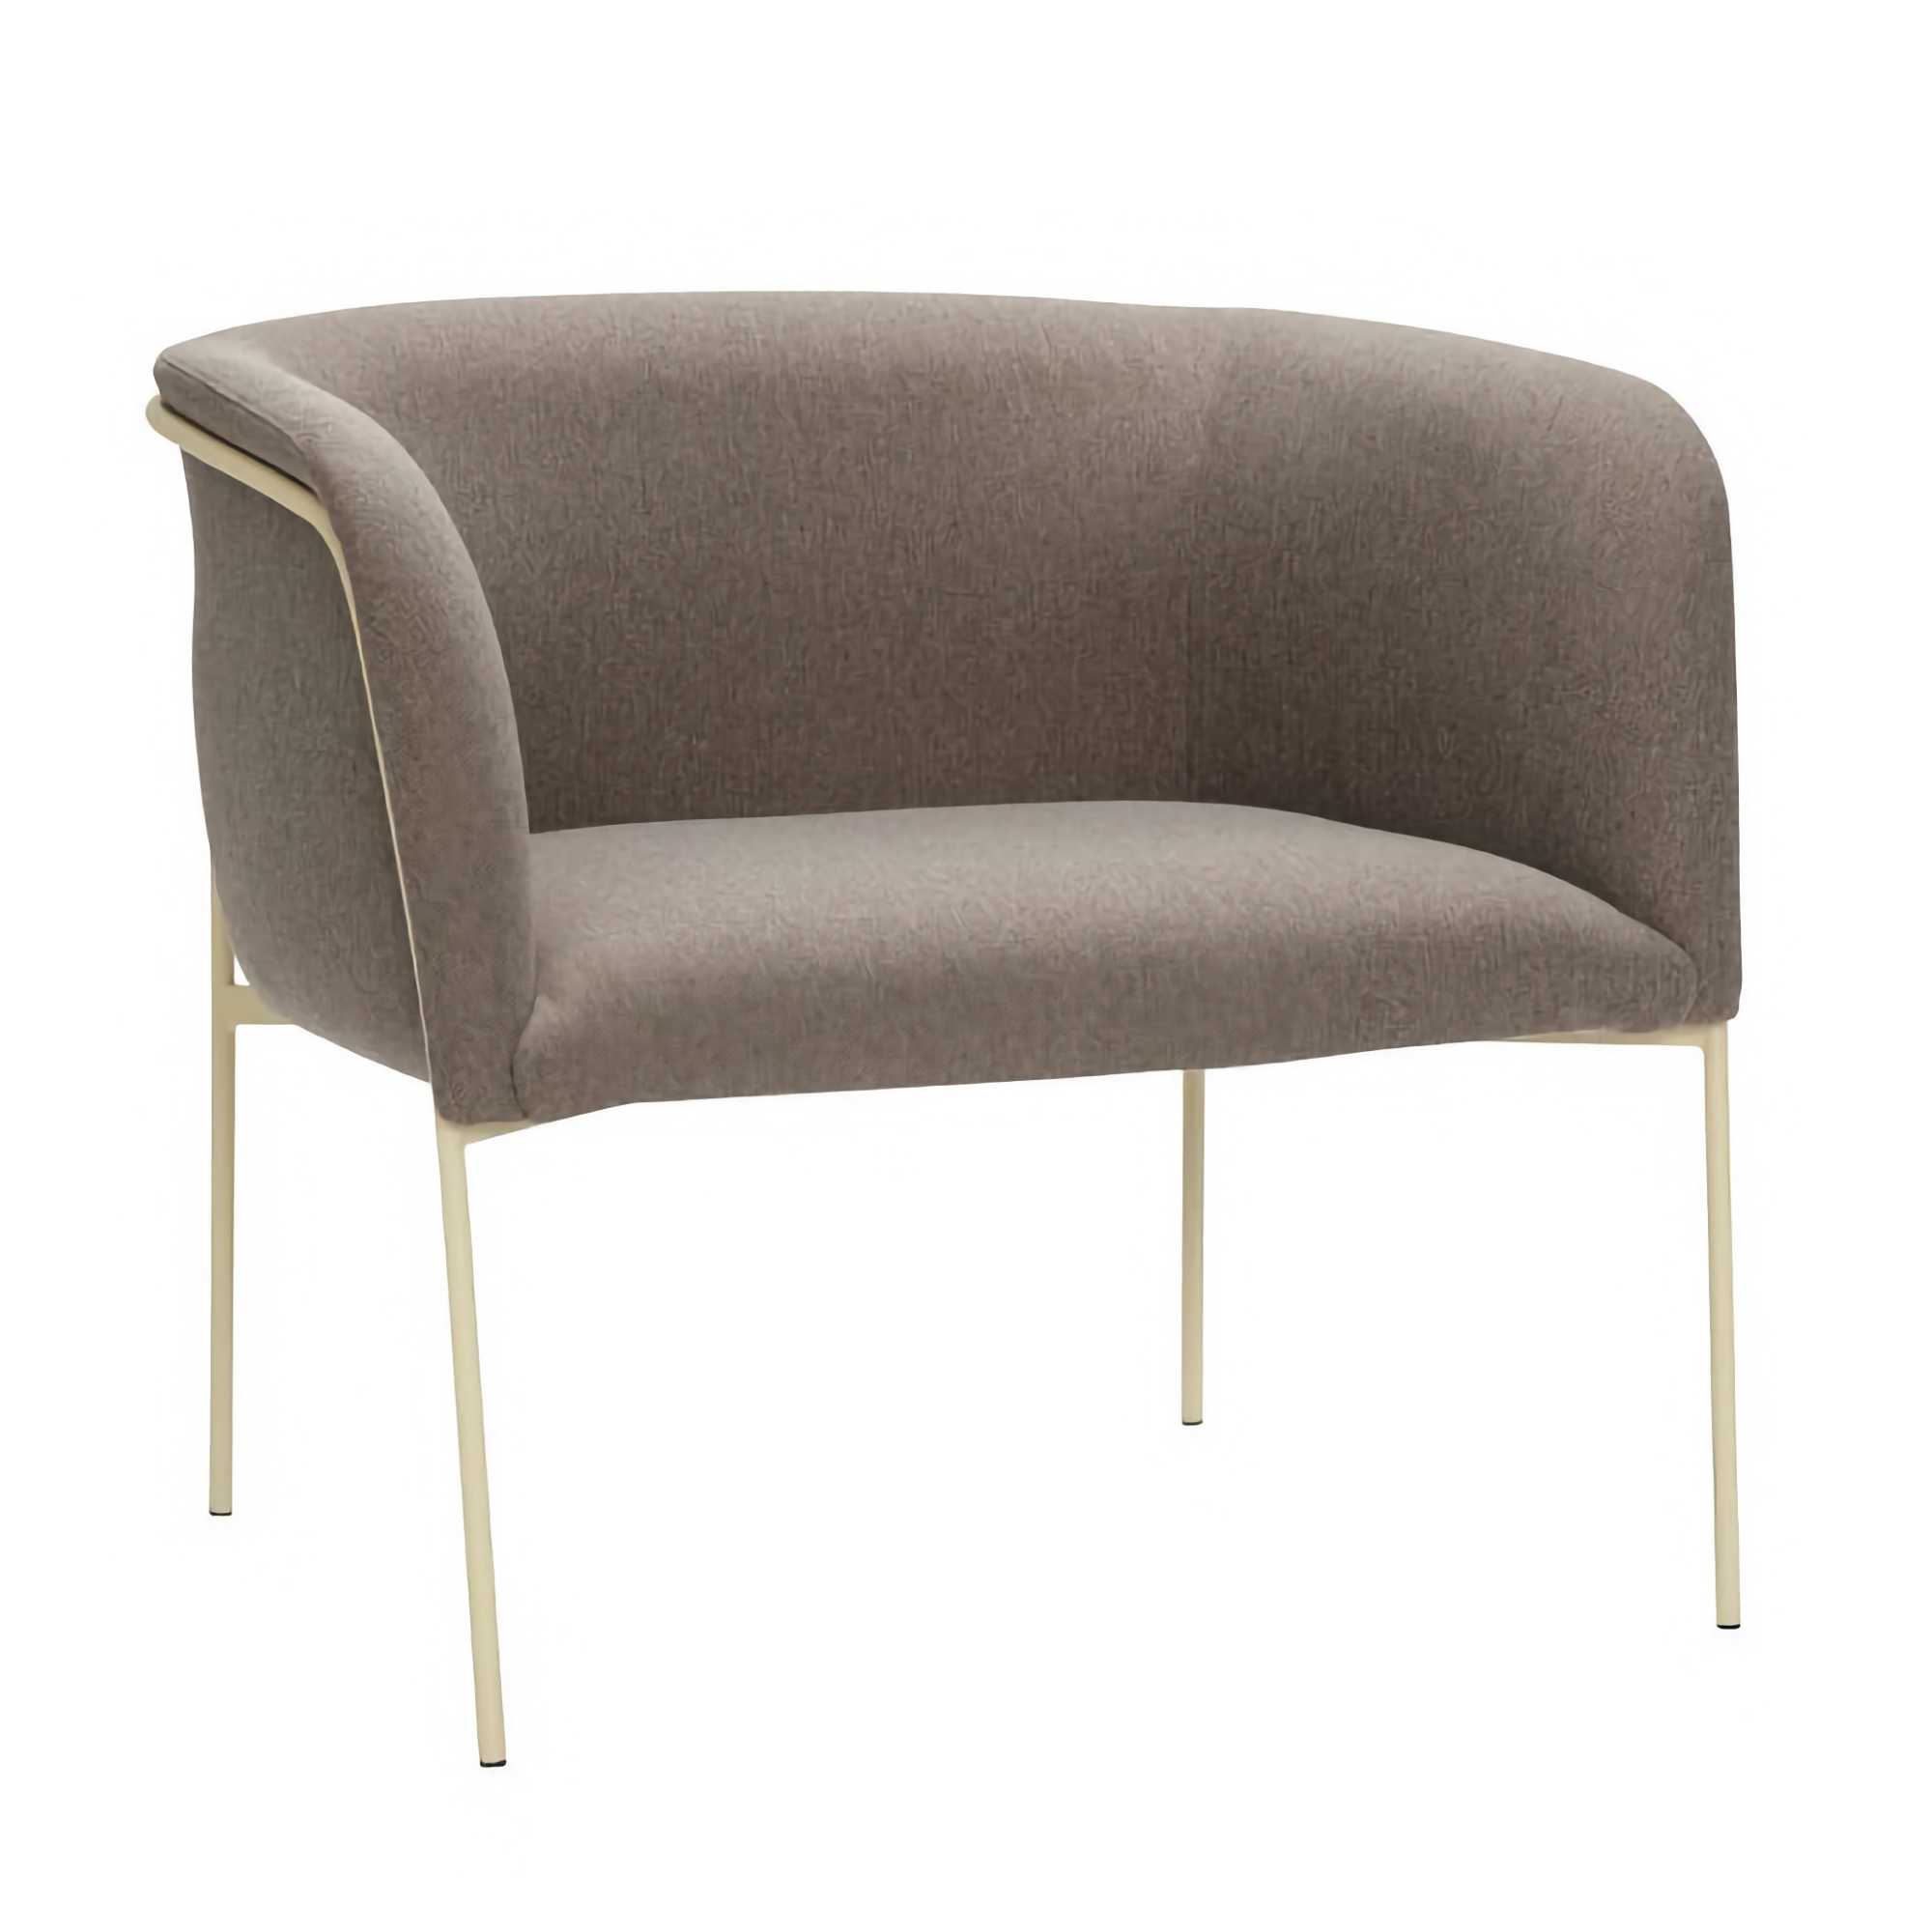 Hübsch Eyrie Lounge Chair, Brown